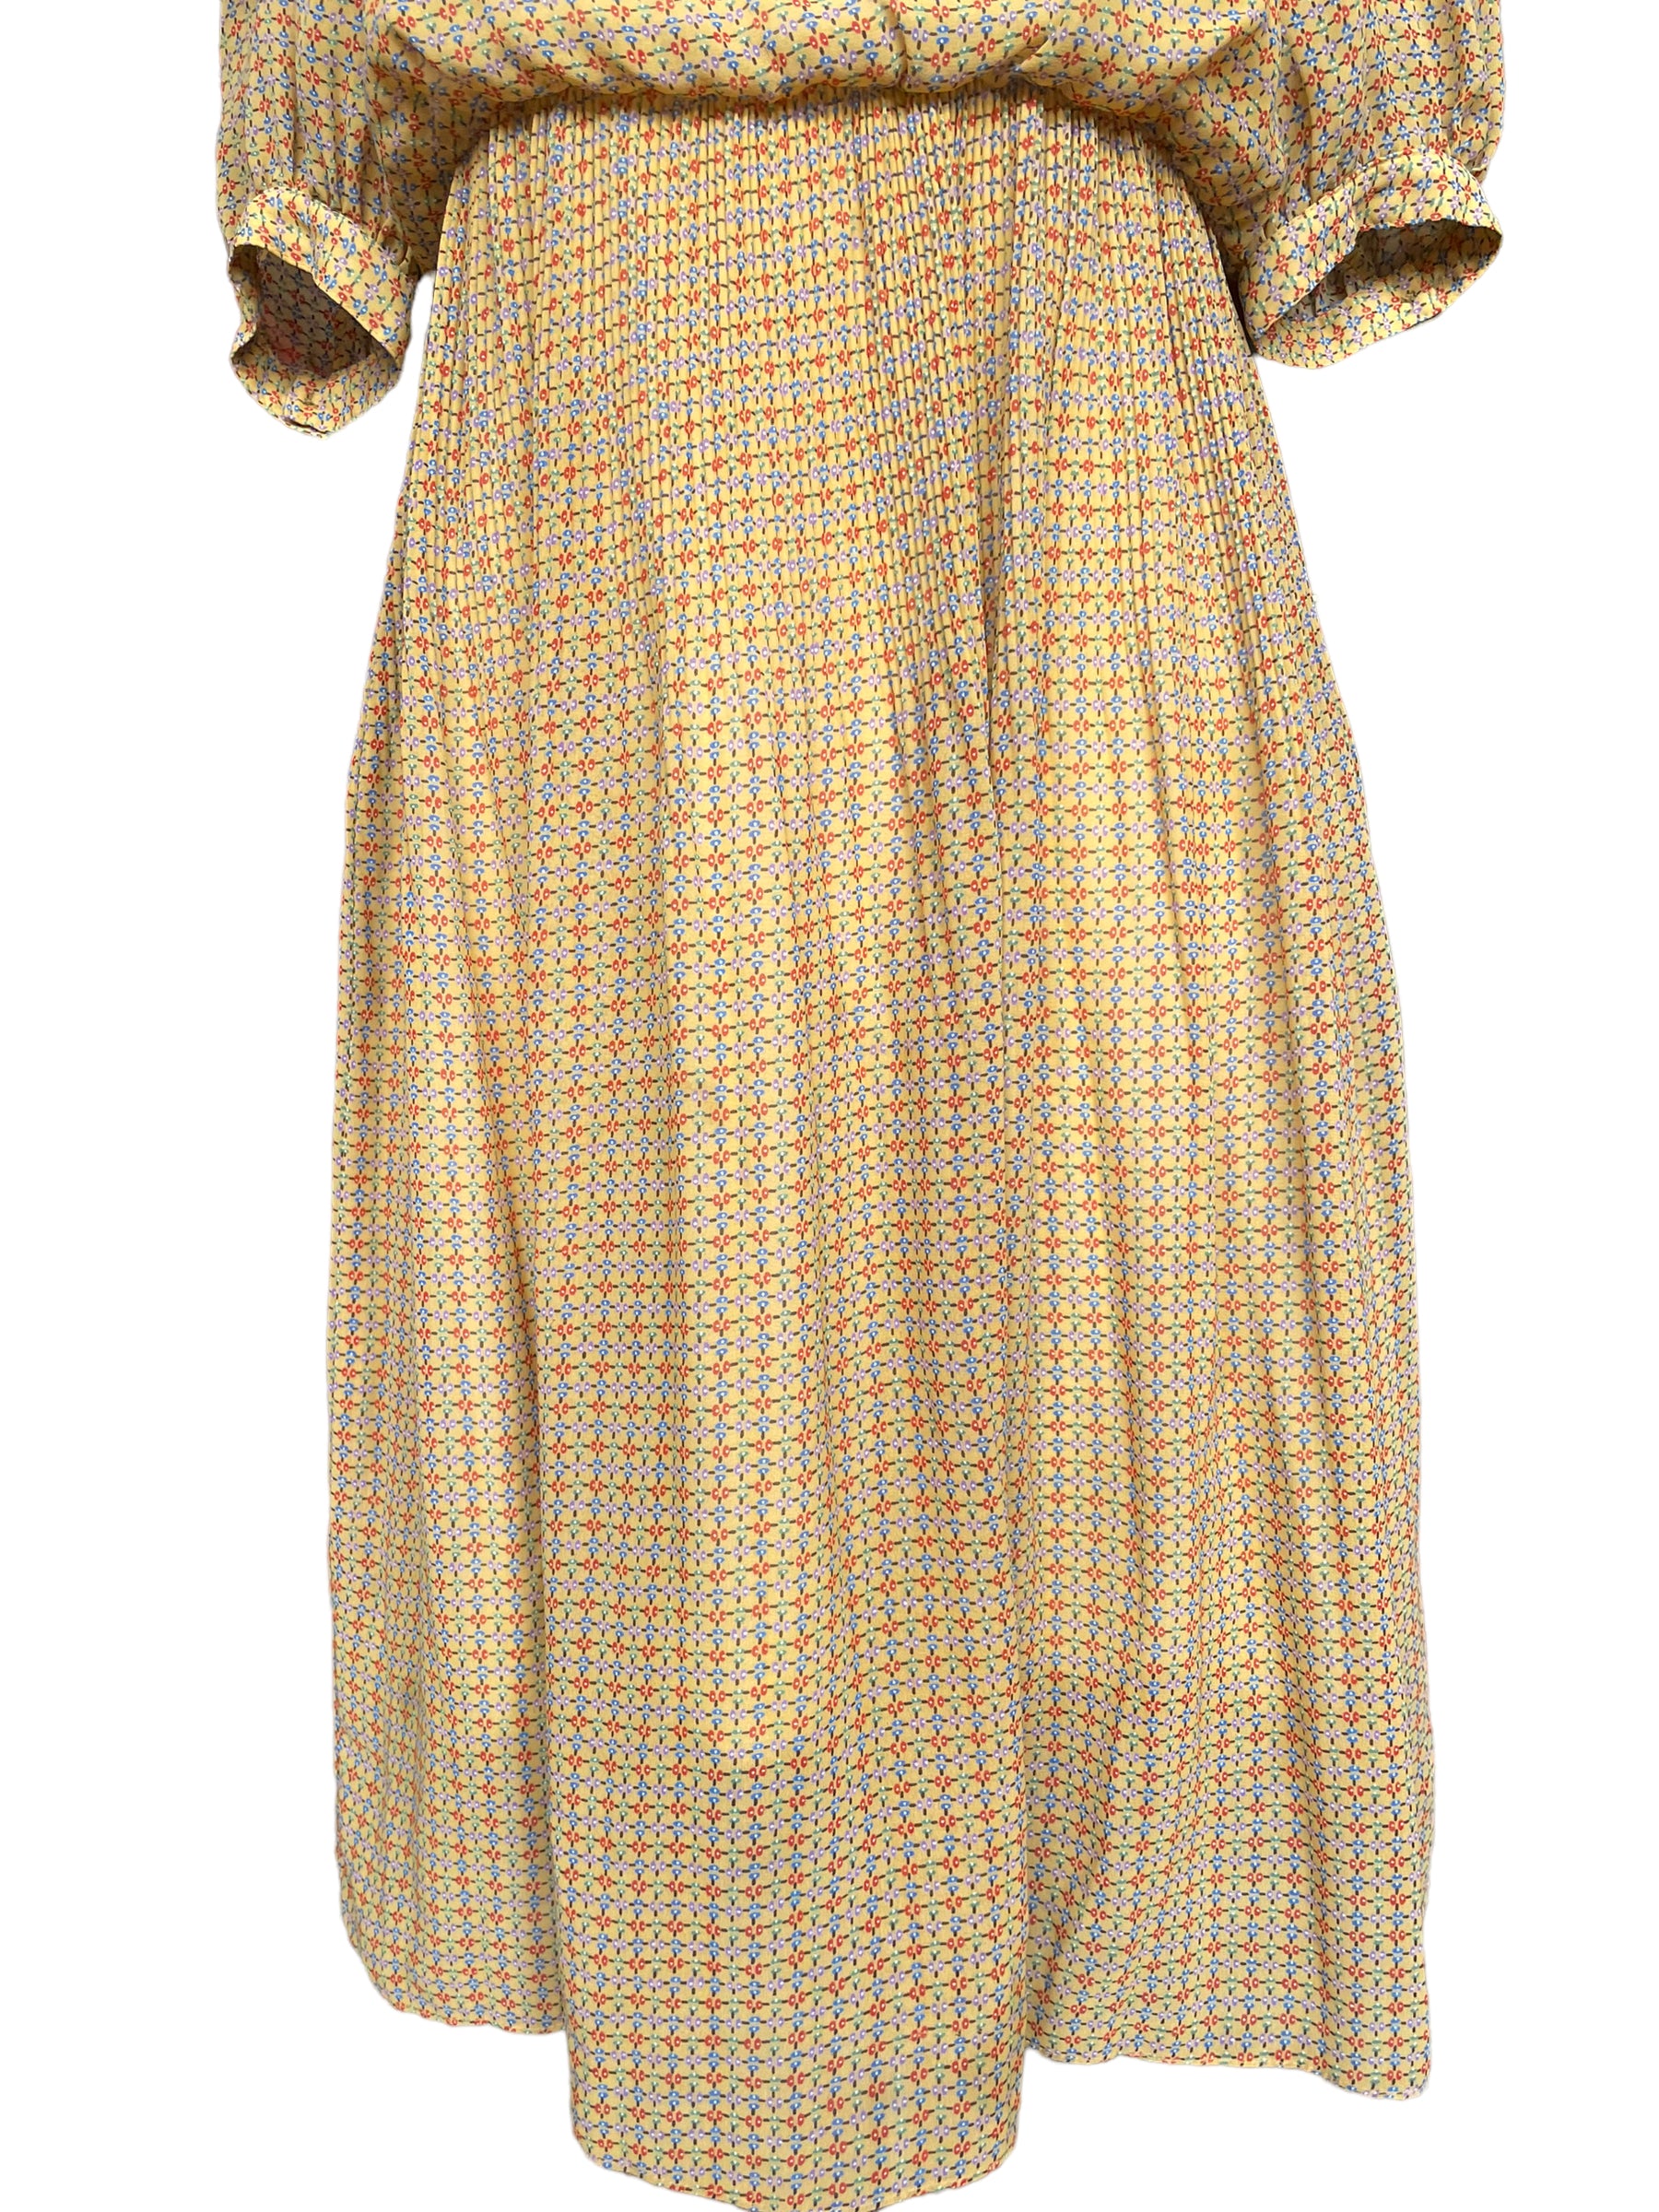 Front skirt view of Vintage 1950s Parisian Sheer Rayon Dress 